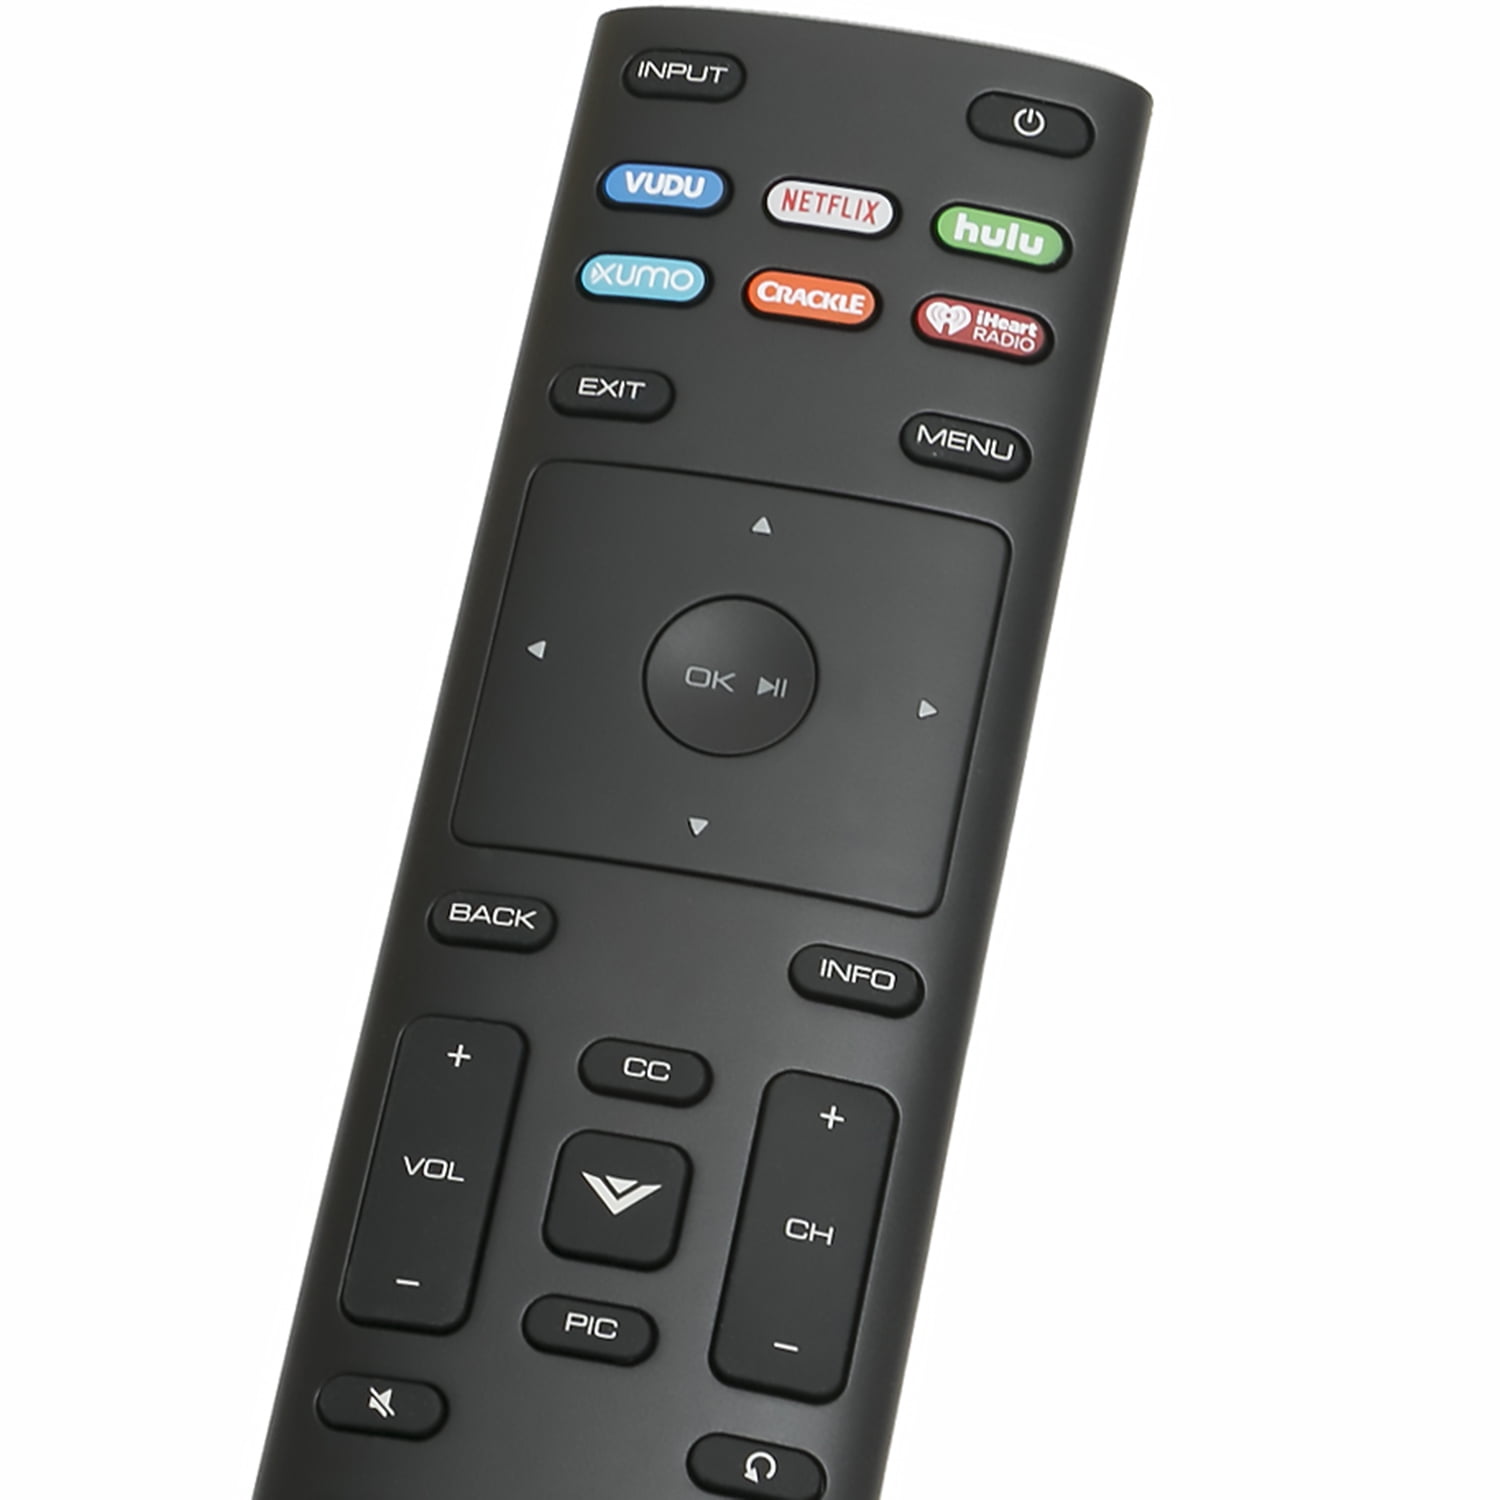 XRT136 Remote Control for Vizio TV D24f-F1 D32f-F1 D43f-F1 D50f-F1 P75-E1 E43-E2 E50-E1 E50x-E1 E55-E1 with Hulu VUDU Netflix XUMO Crackle Iheart Shortcut App Key